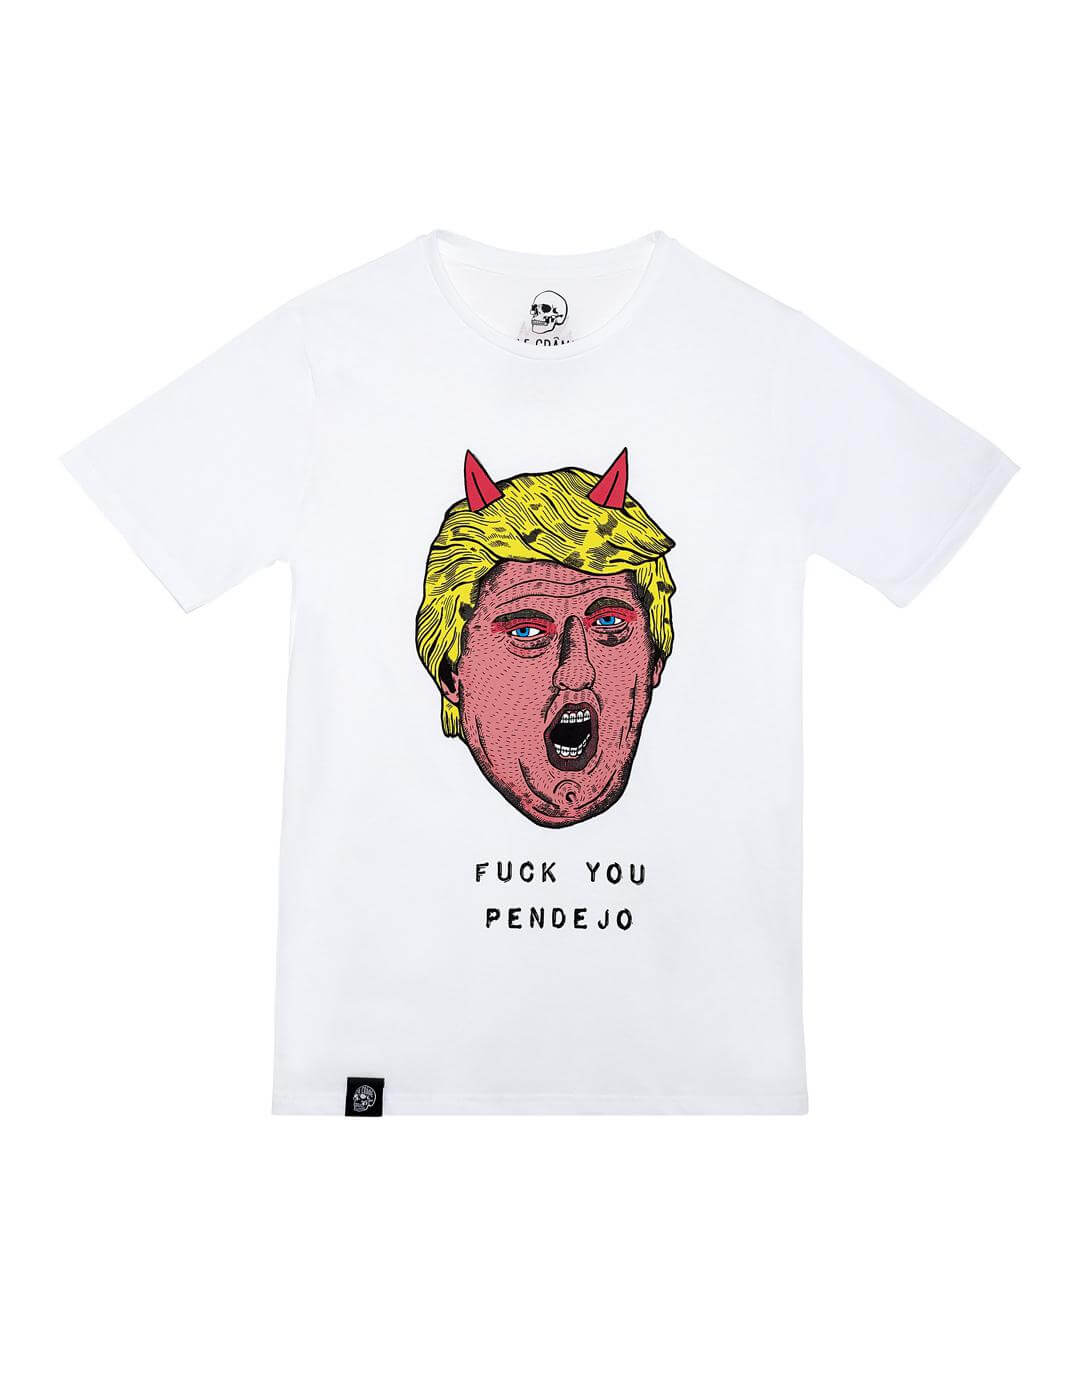 Fuck Pendejo T-Shirt, Le Crane 